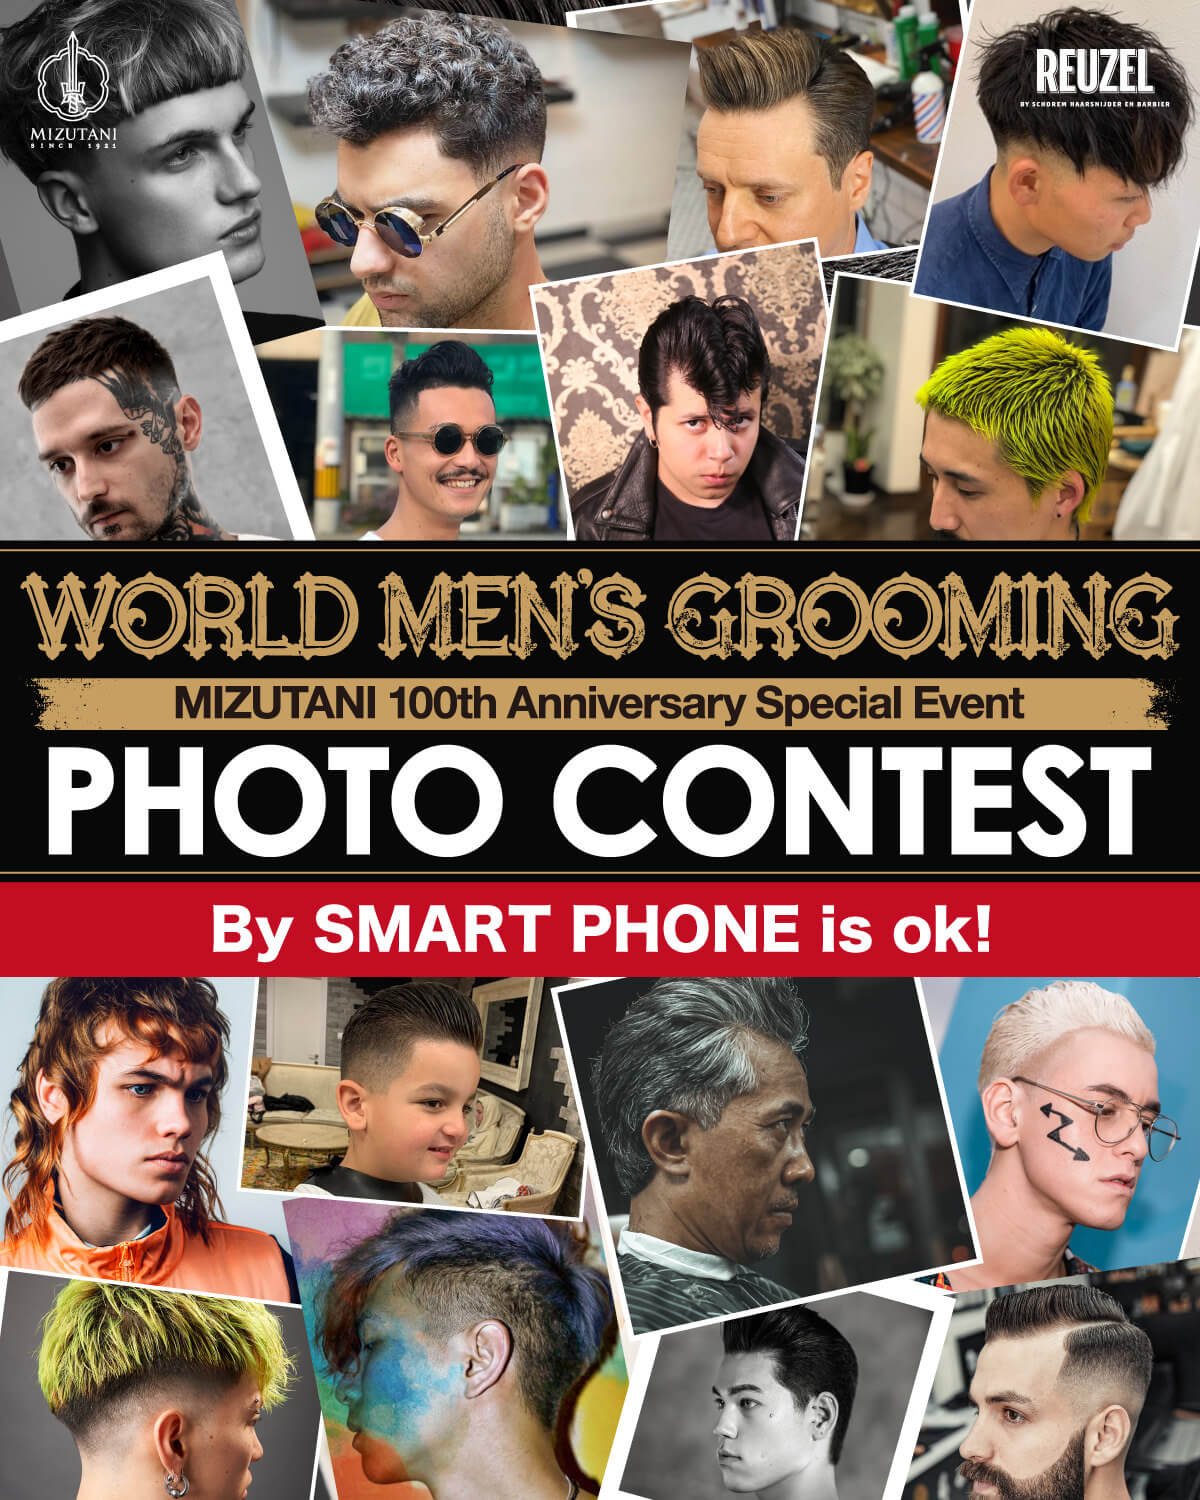 WORLD MEN’S GROOMING PHOTO CONTEST